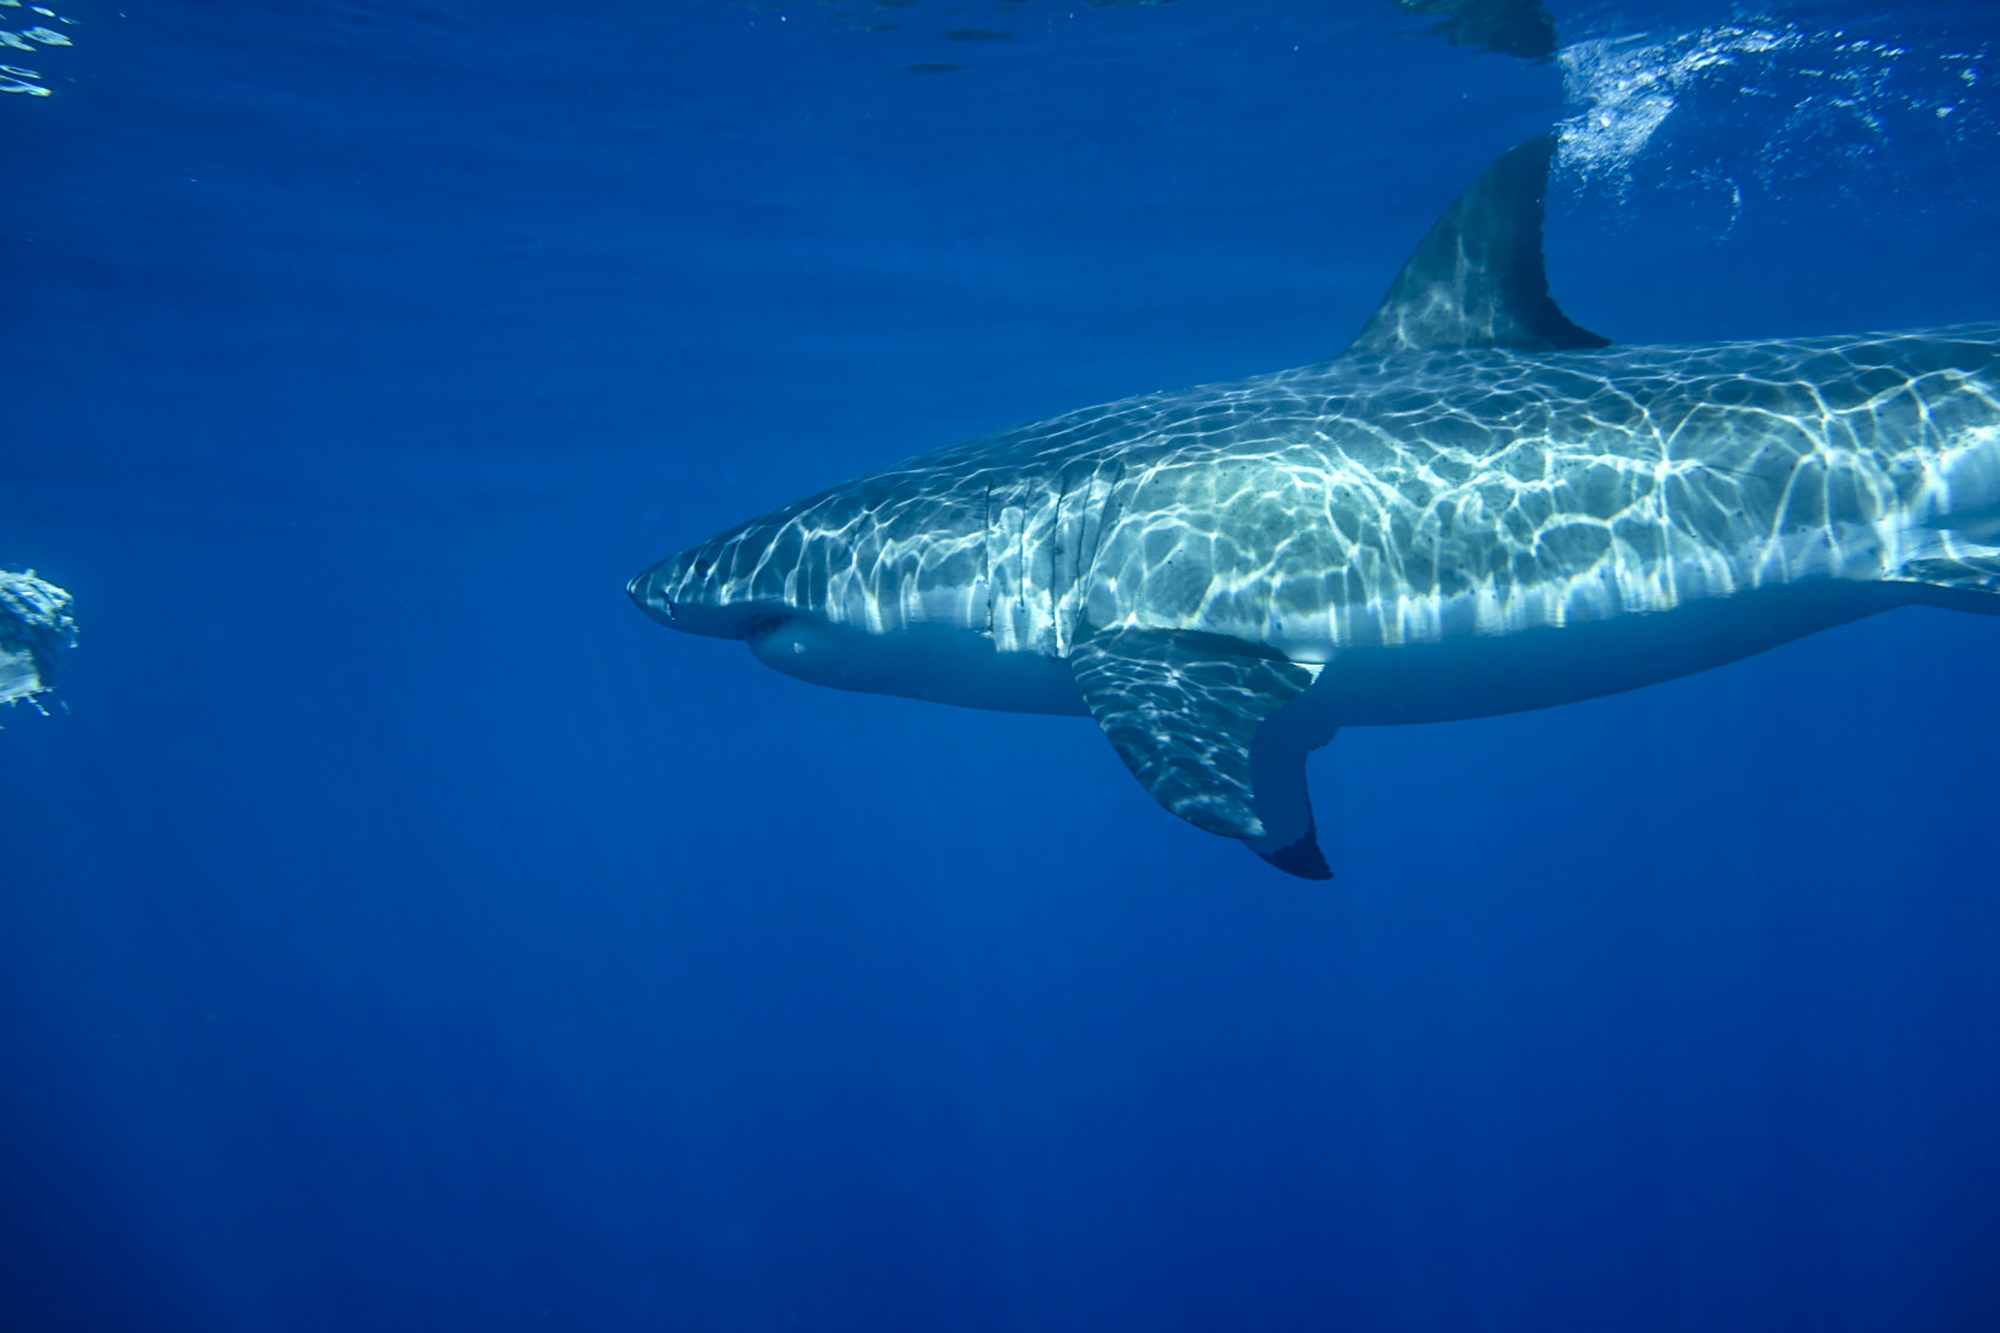 A shark swims through the blue